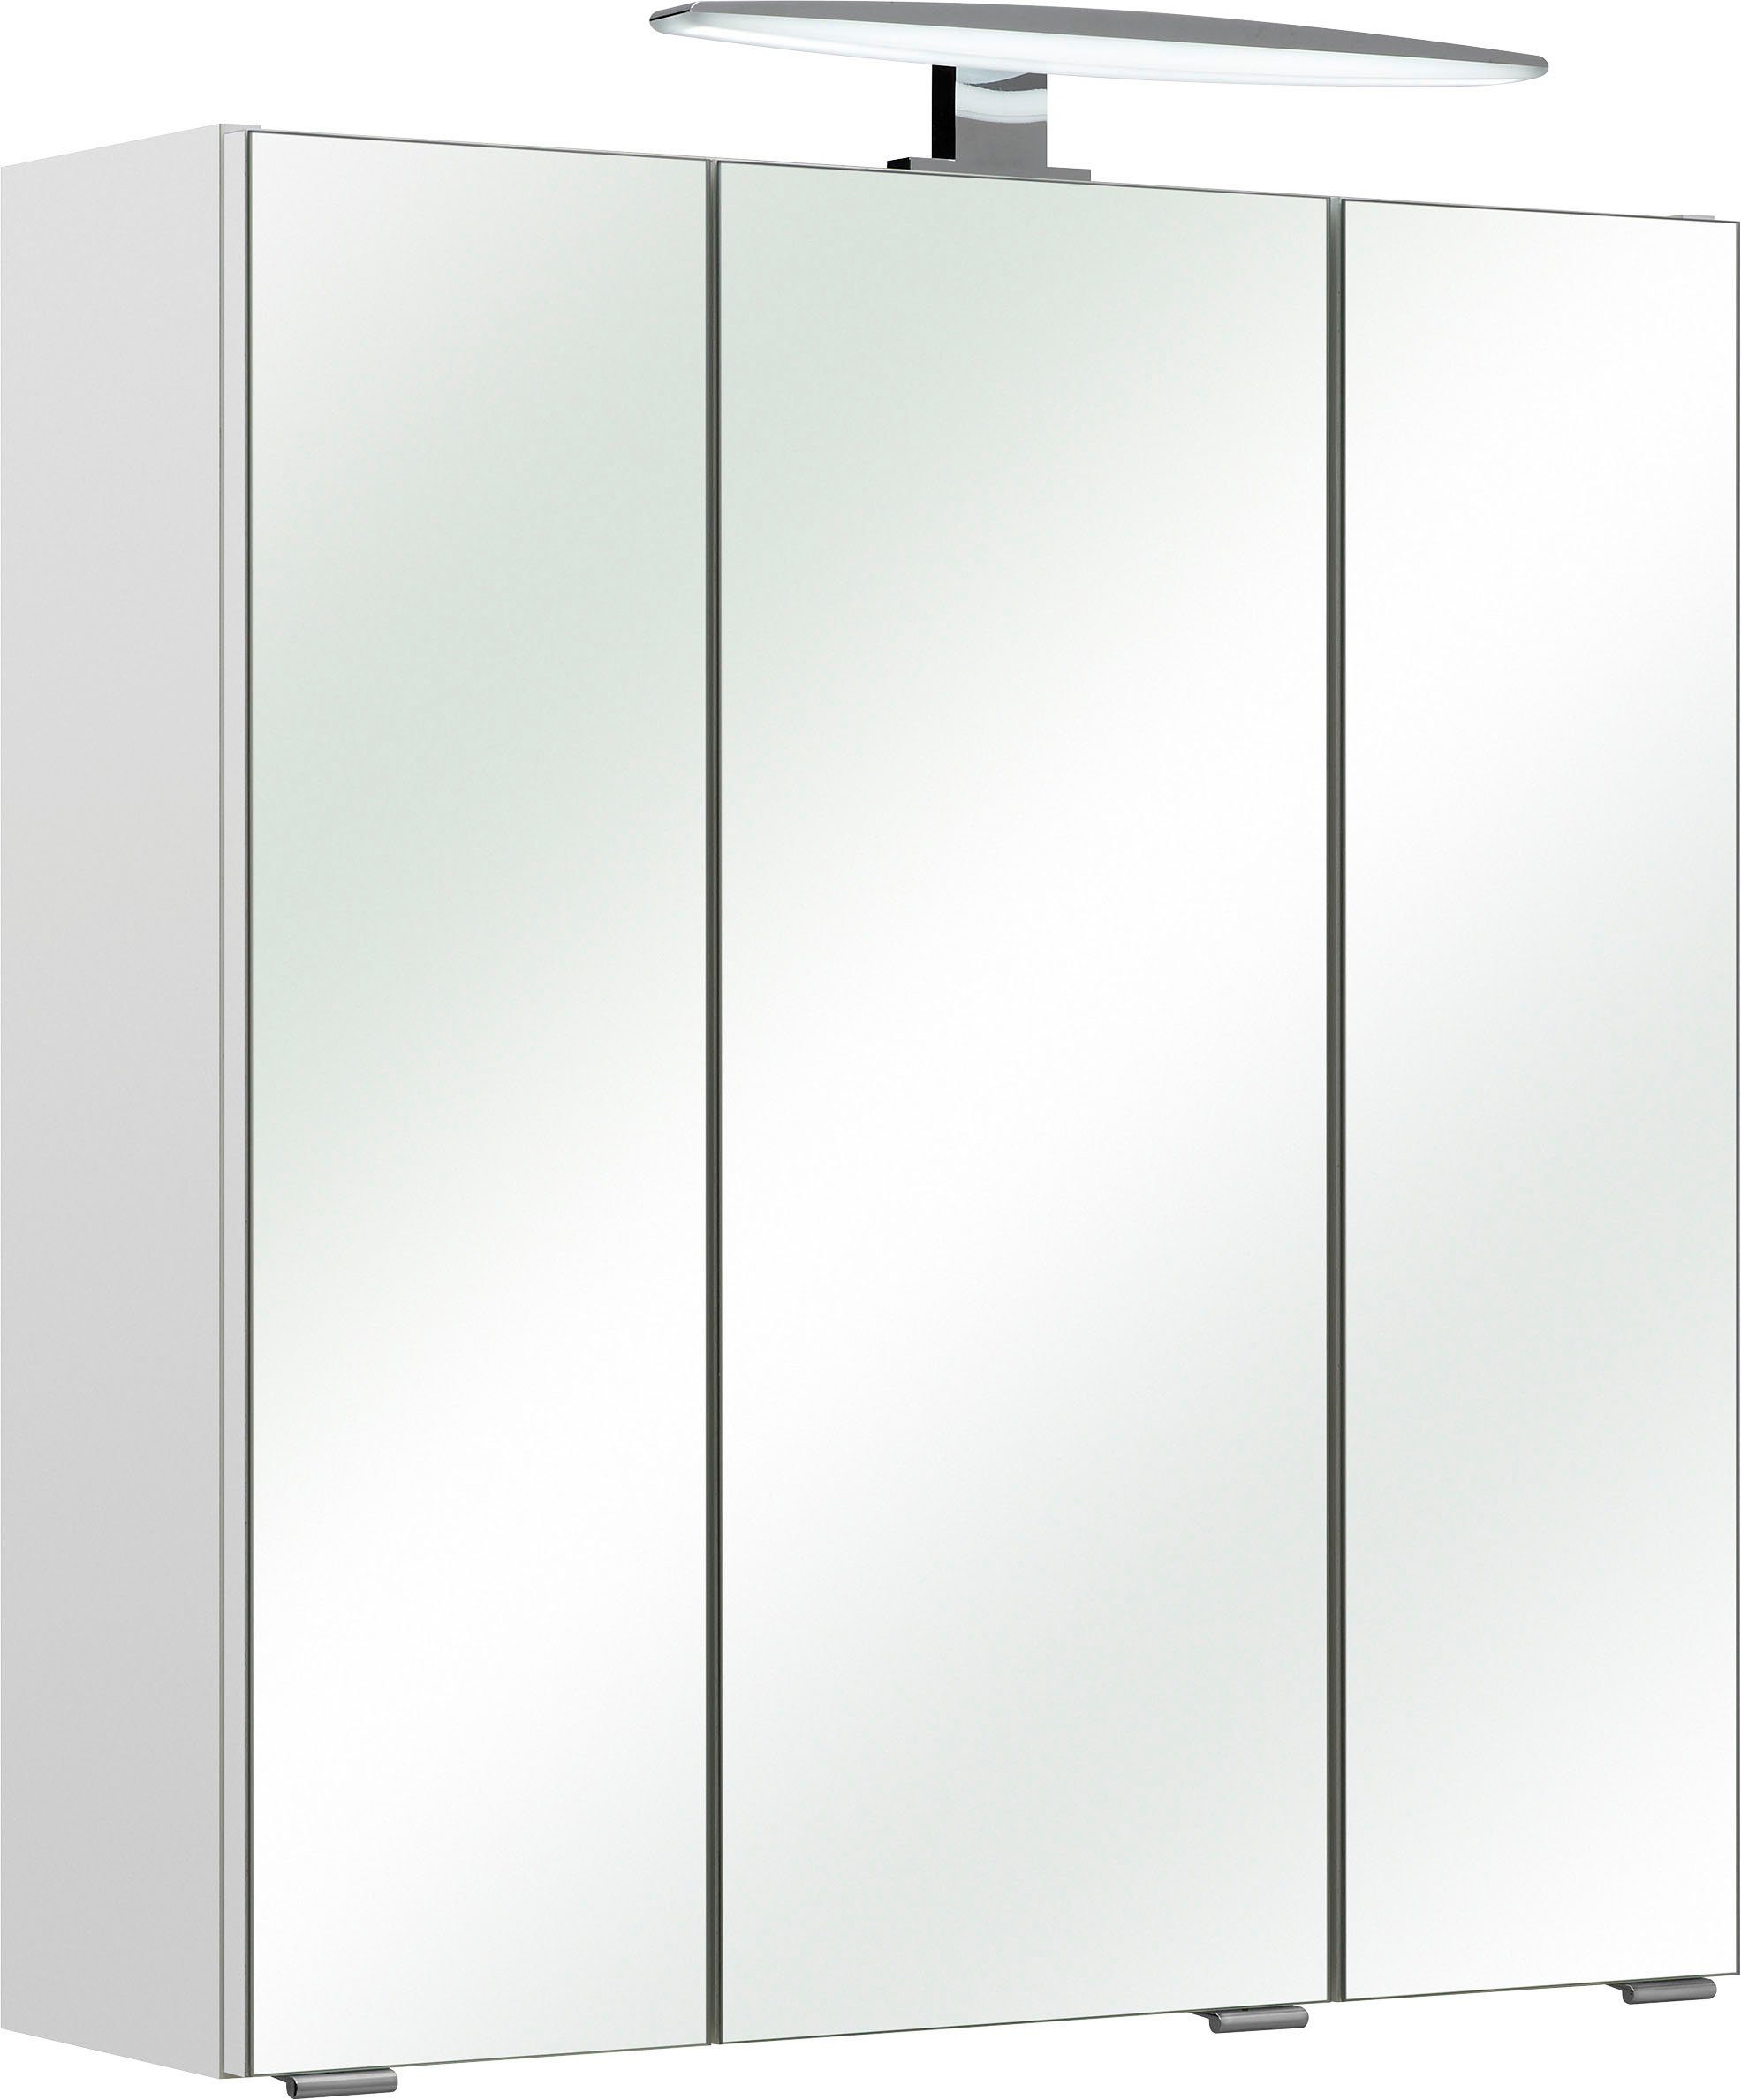 PELIPAL Spiegelschrank Quickset 953 Breite 65 cm, 3-türig, LED-Beleuchtung,  Schalter-/Steckdosenbox, Maße (B/T/H): 65/20/70 cm